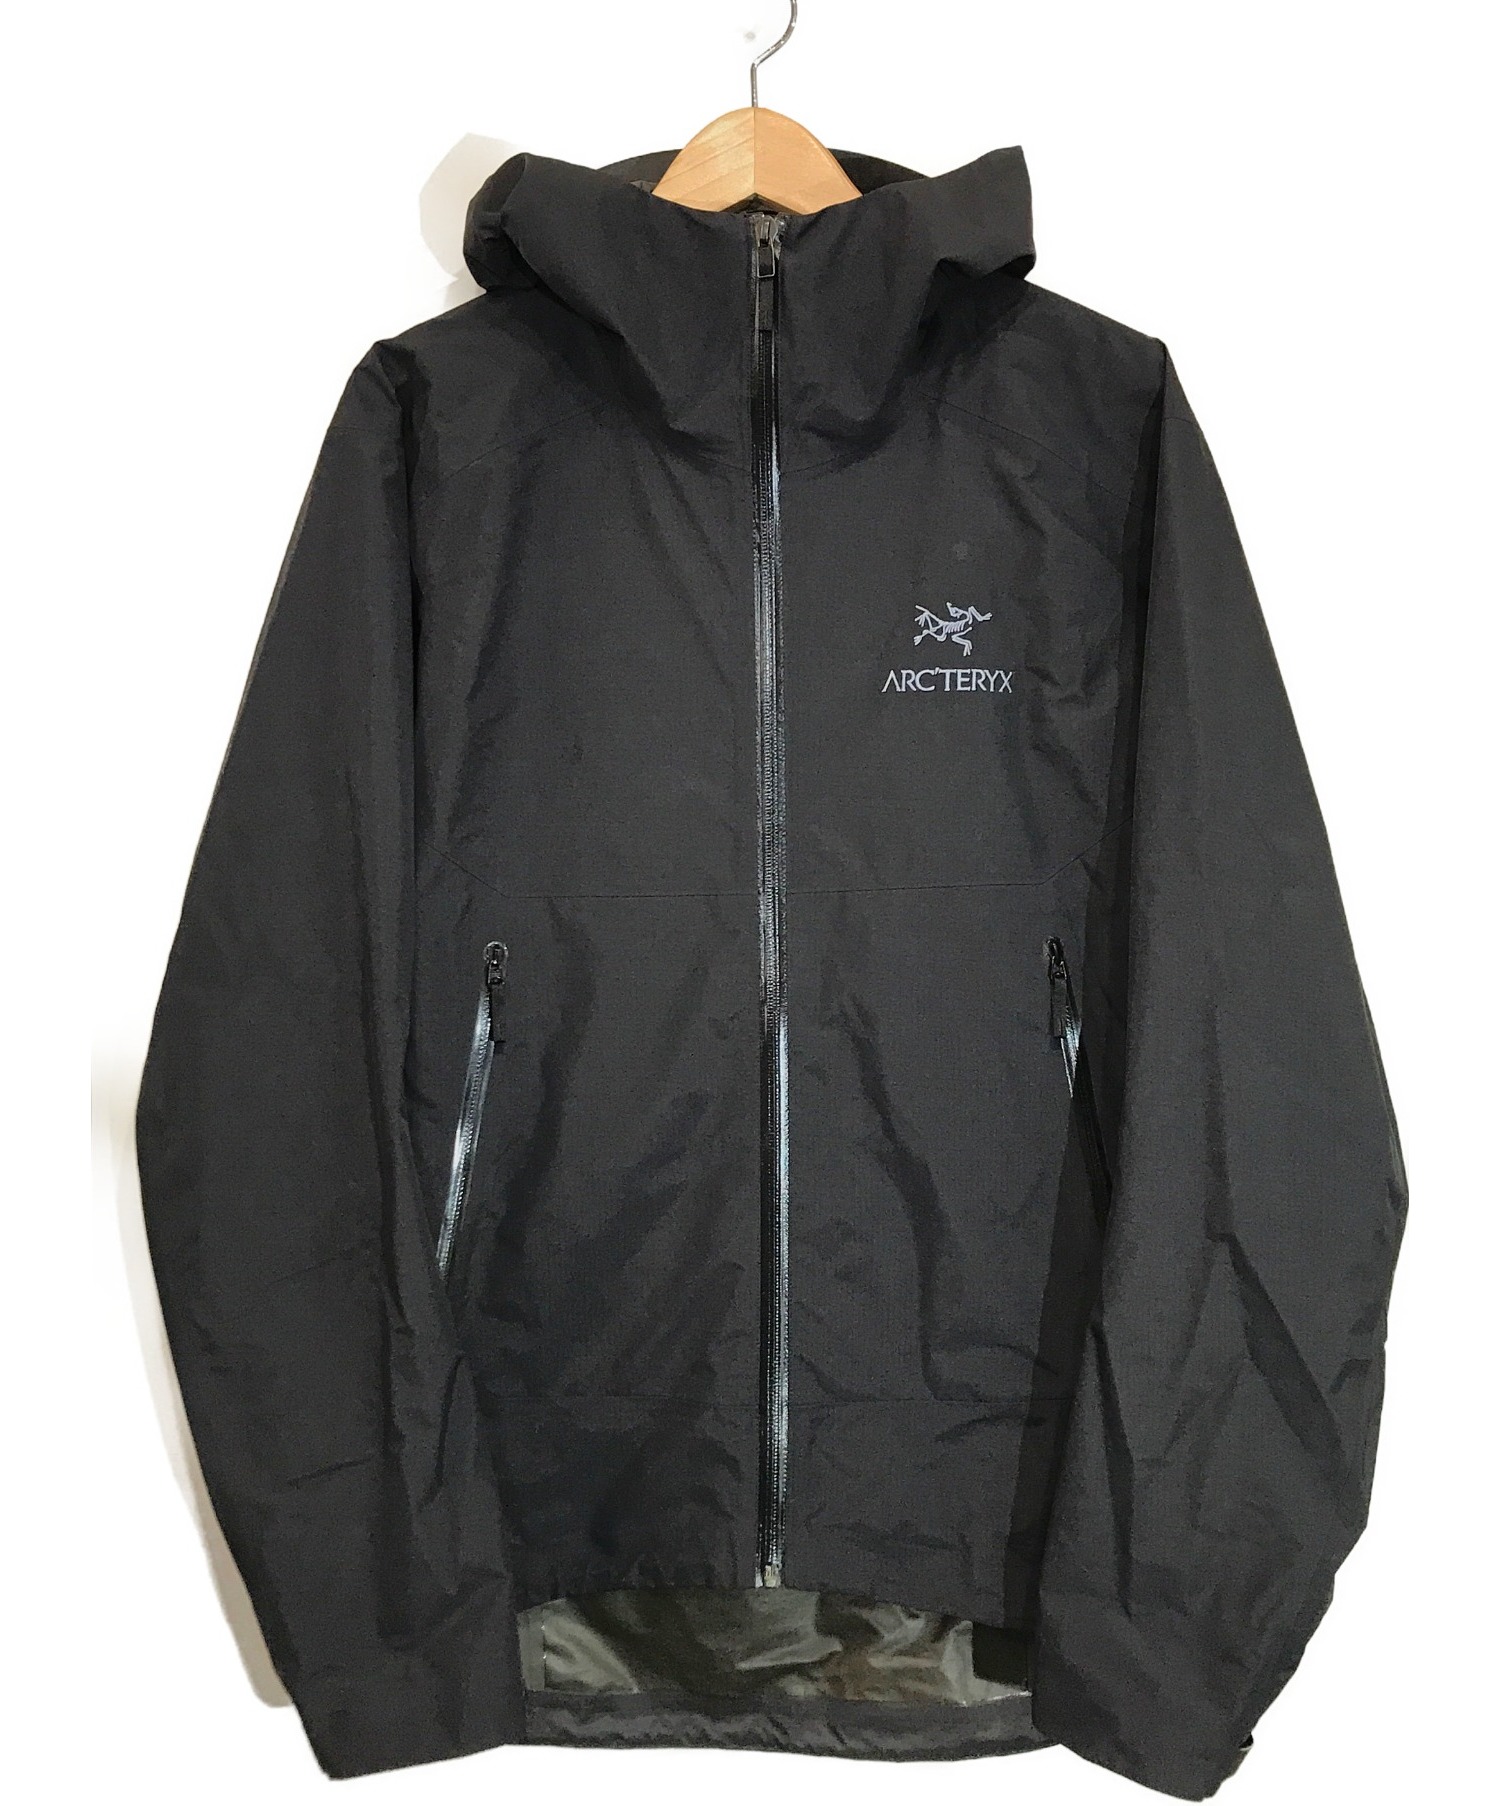 ARC'TERYX (アークテリクス) ゼータSLジャケット ブラック サイズ:XS ZETA SL JACKET